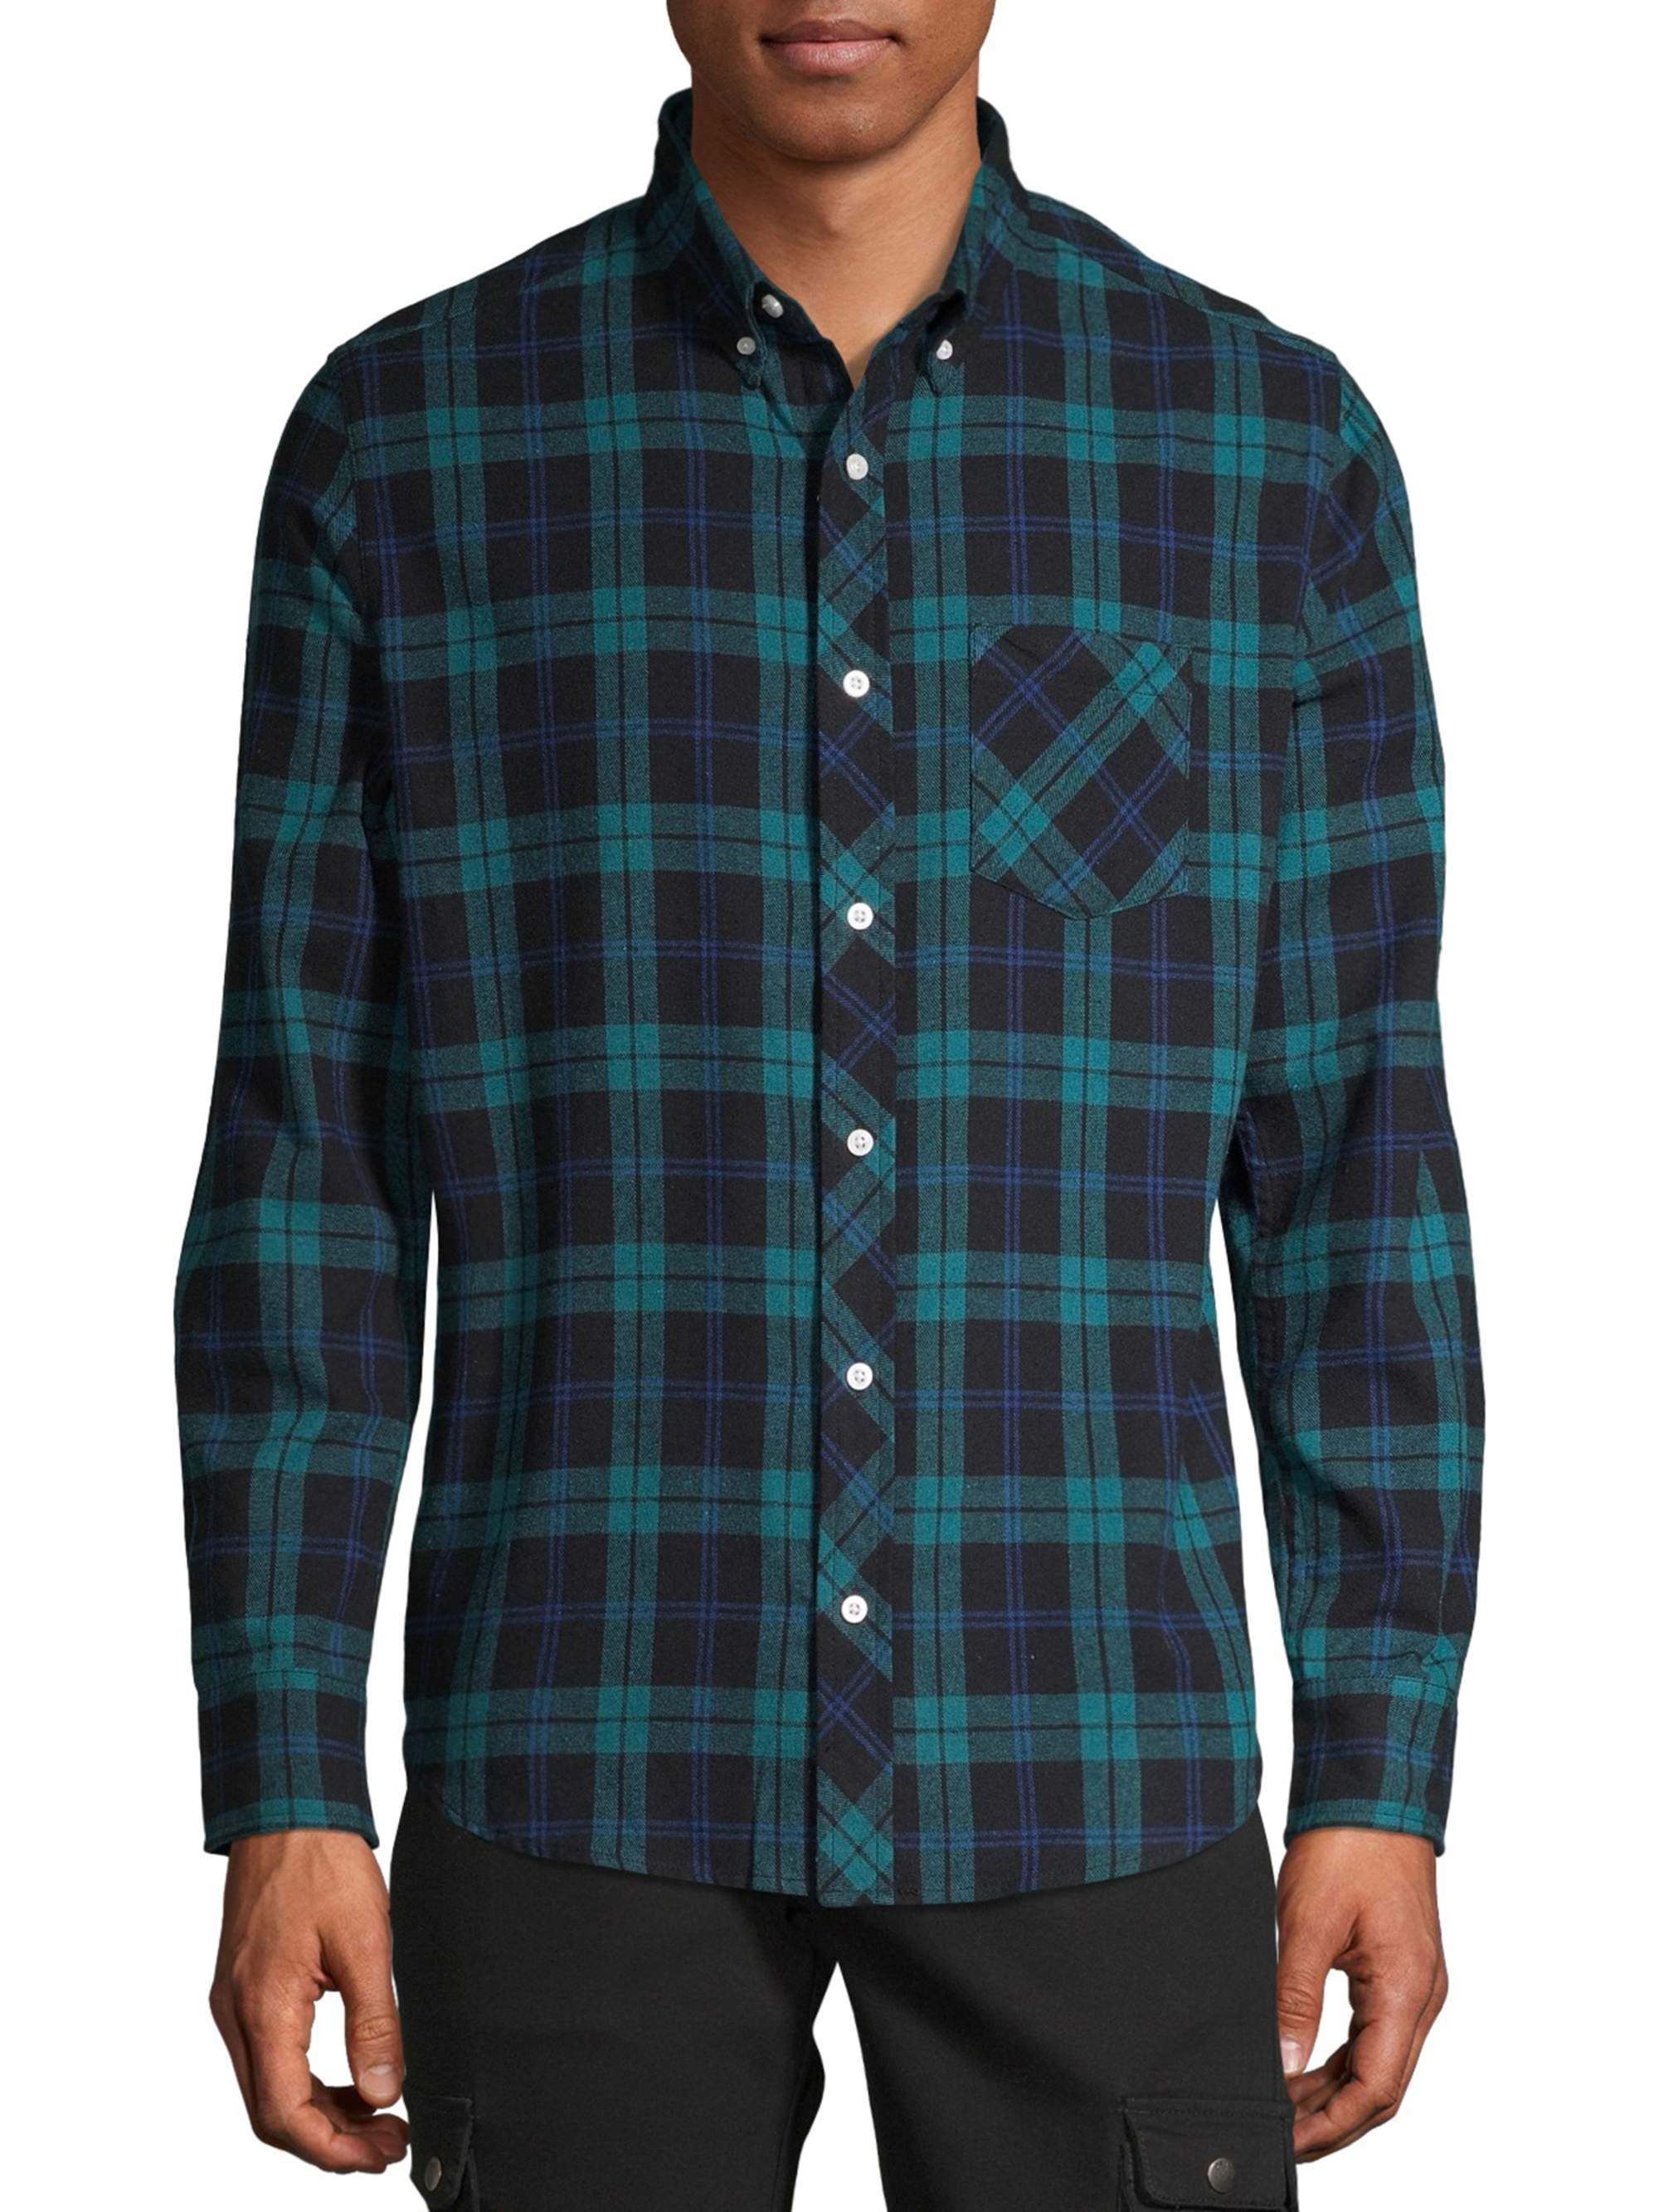 One Day Away Men's Long Sleeve Brushed Flannel Shirt - Walmart.com